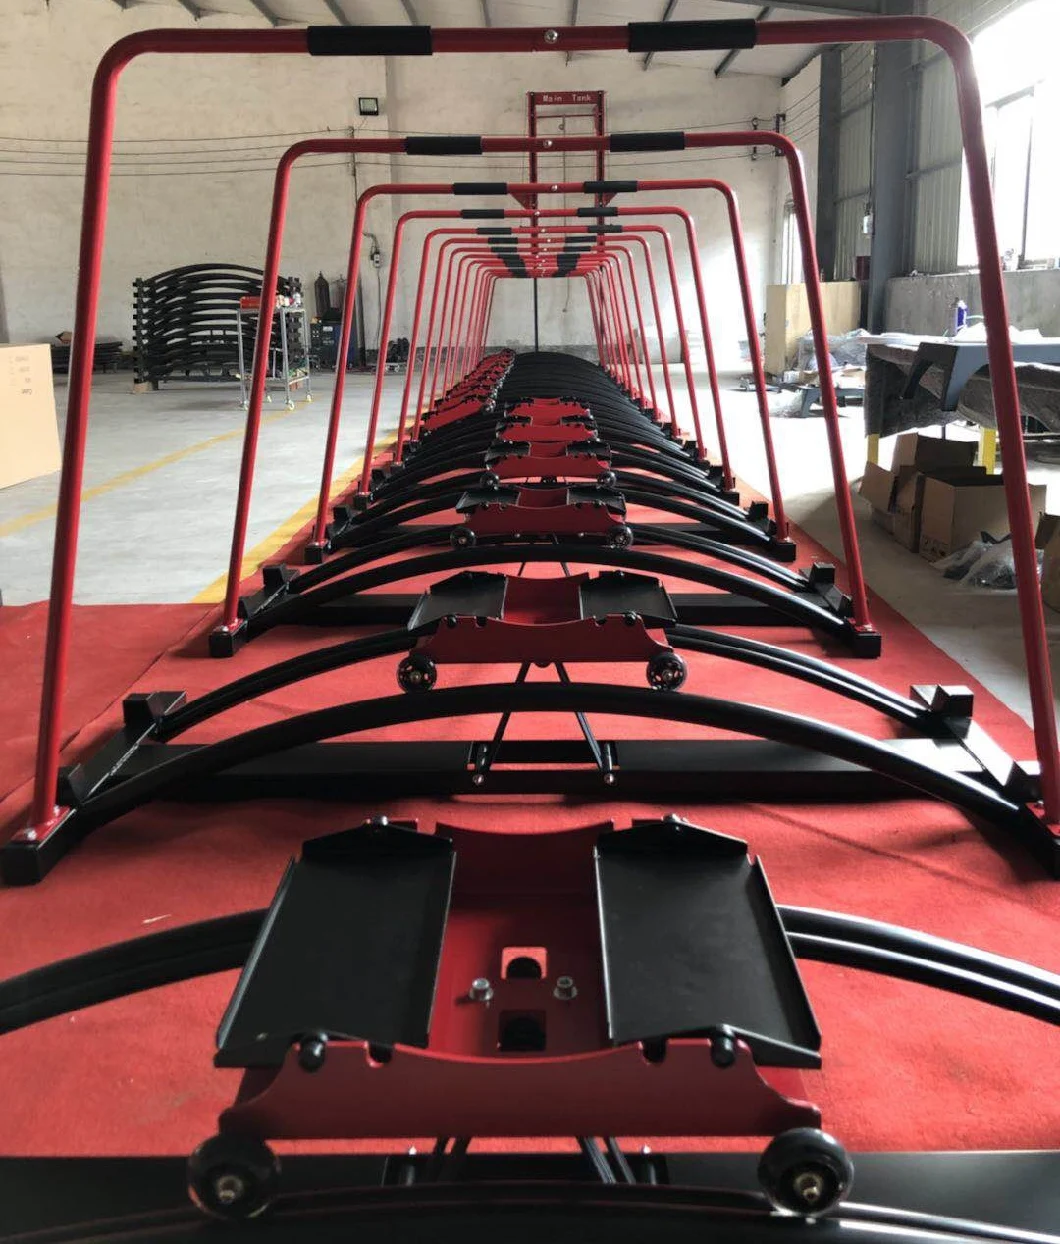 Ont-Sz003 Online Power Ski Simulators Gym Cardio Equipment Ski Exercise Machine Skiing Workout Machines for Cardio and Strength